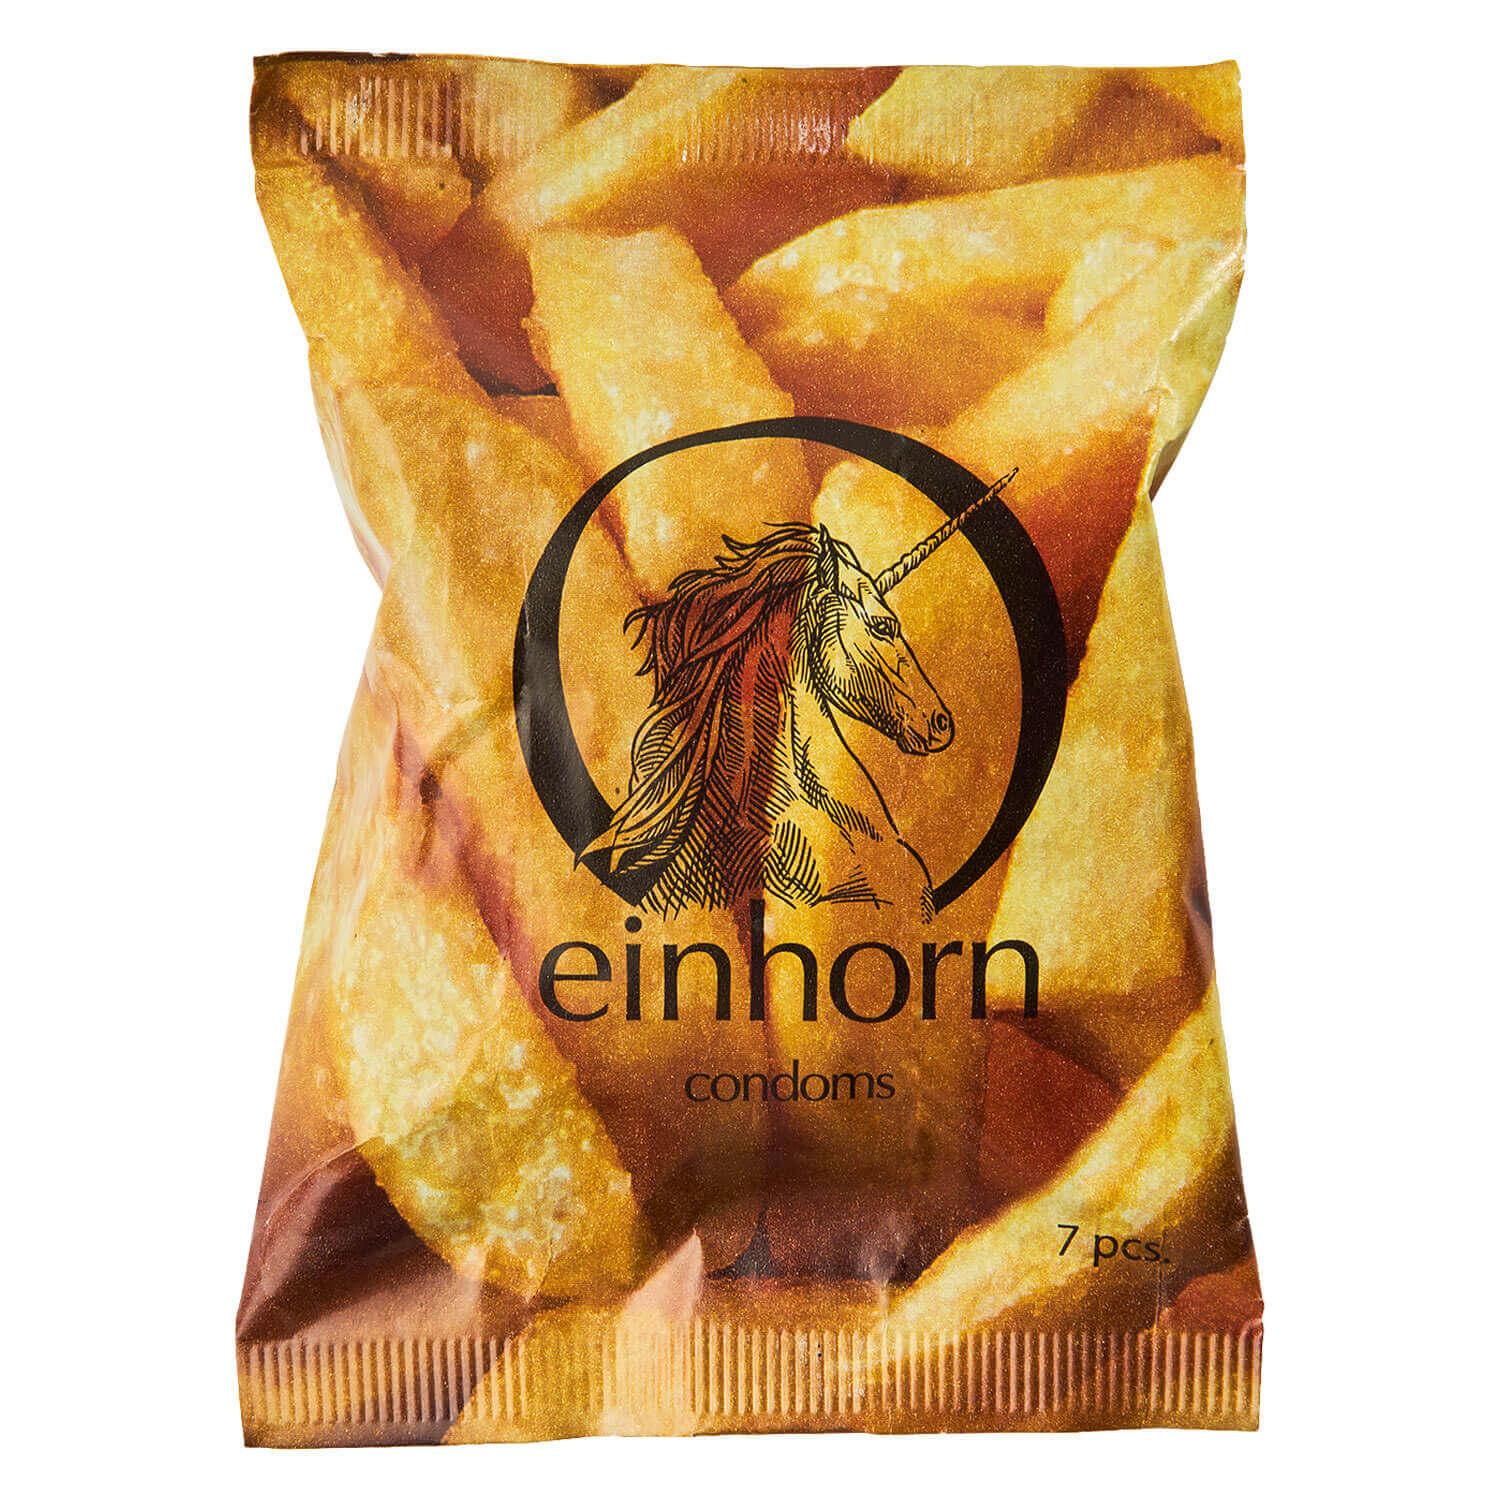 einhorn - Kondome Foodporn